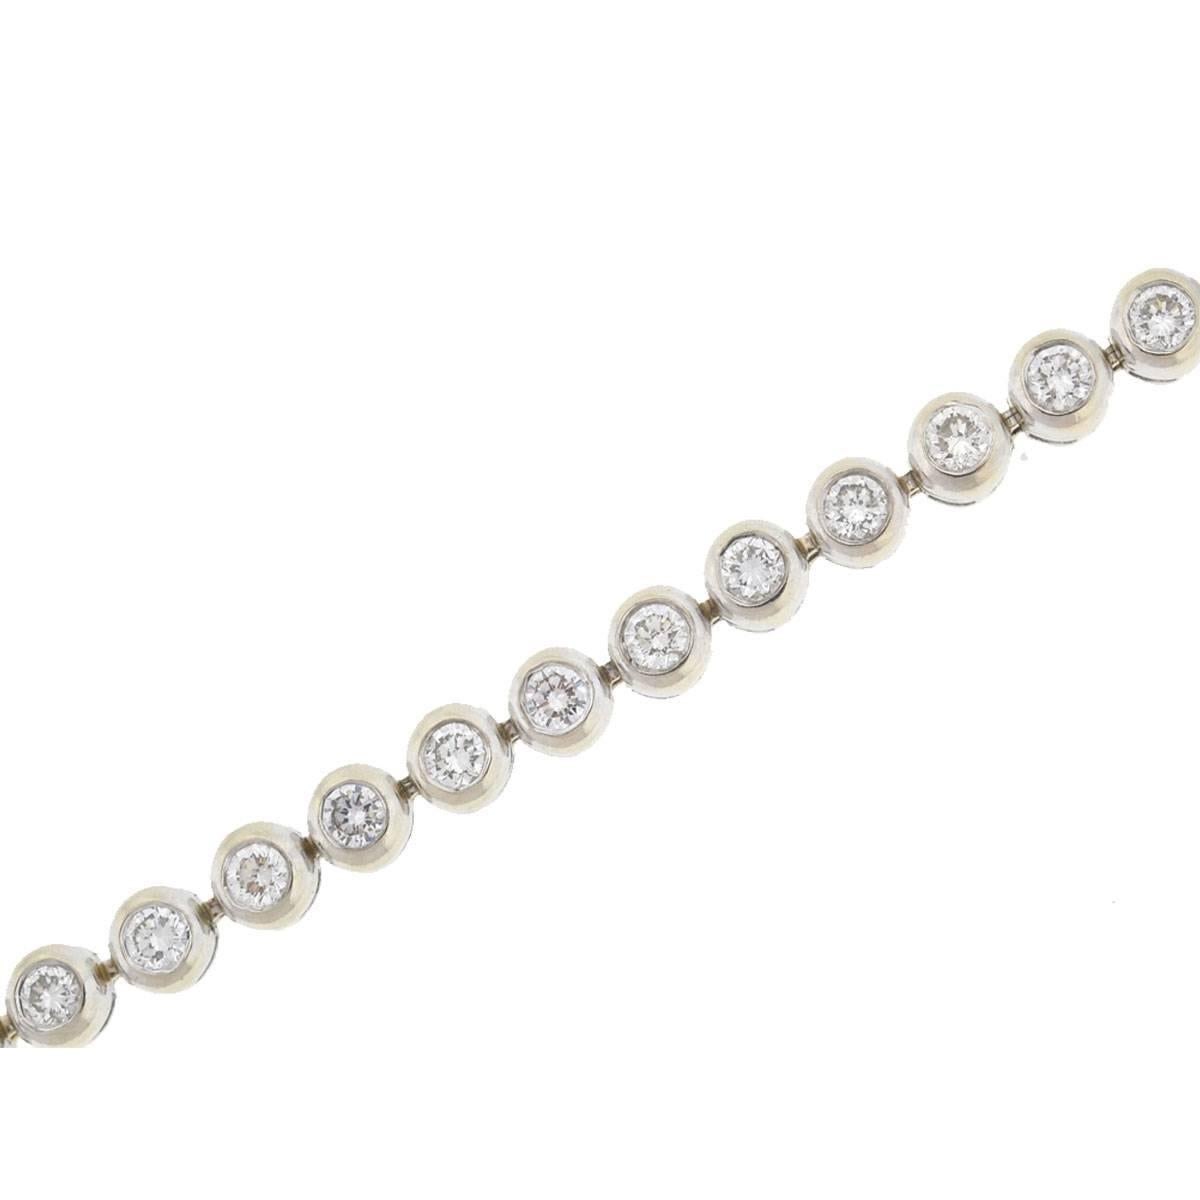 Company-N/A
Style-Bezel Diamond Set Tennis Bracelet
Metal-14k White Gold
Stones-Diamonds Approx. 5.6 cts
Weight-24.49 G
Length-7.25